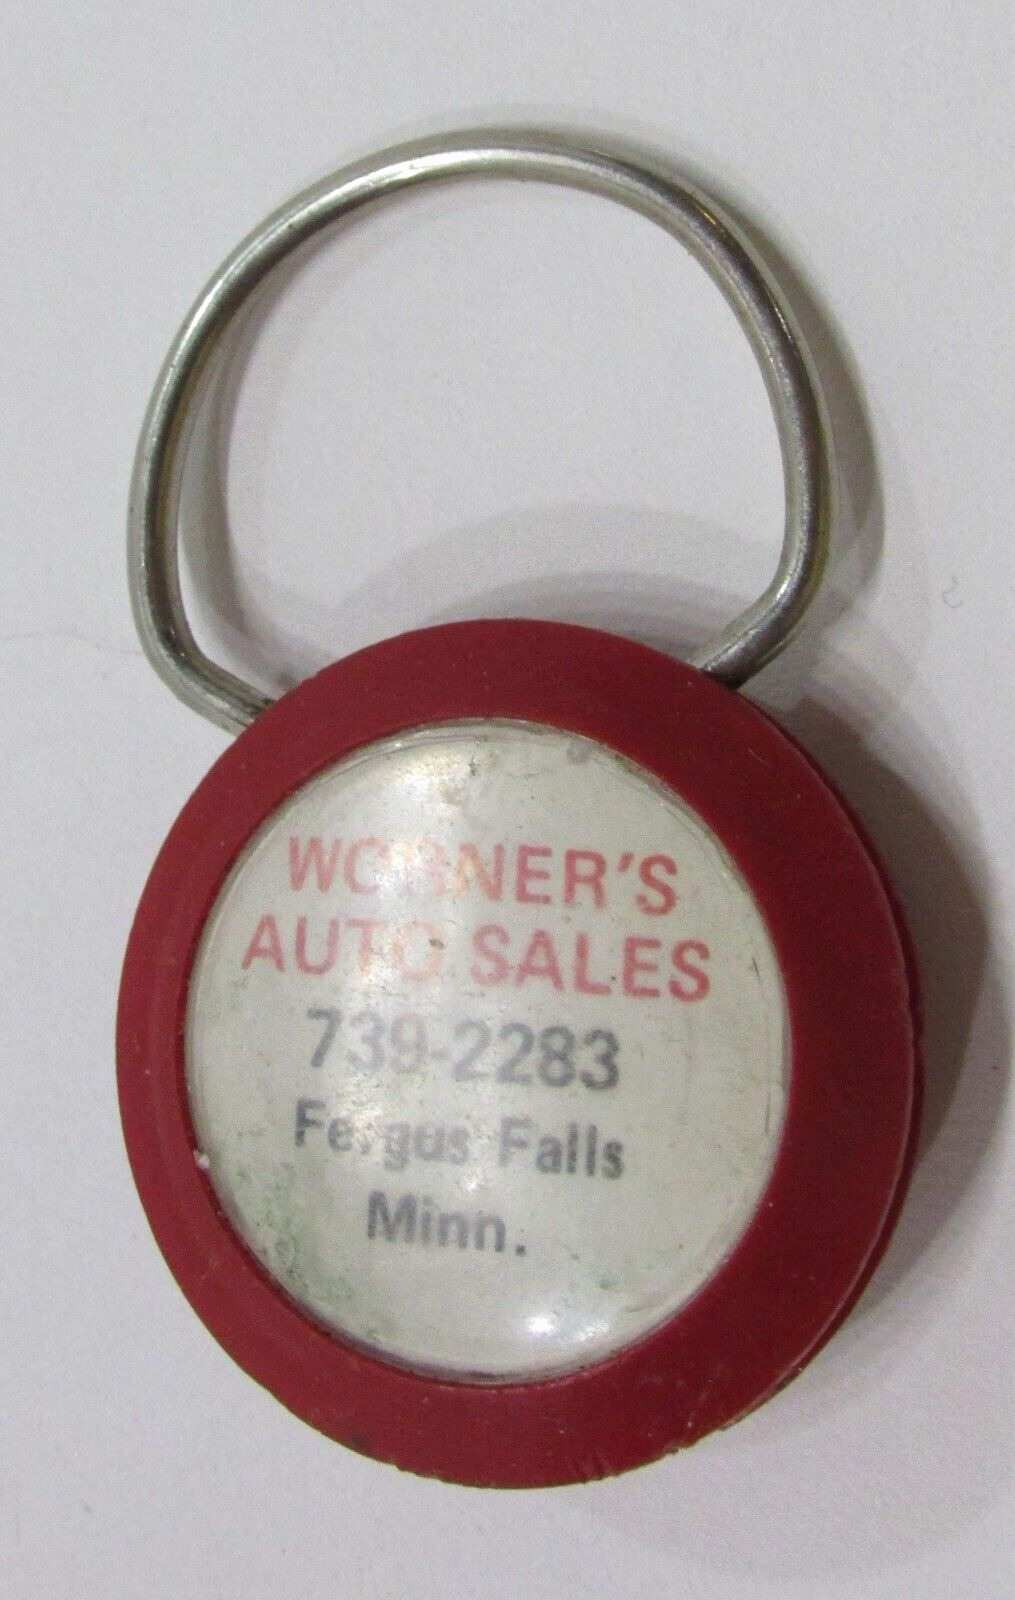 Vintage 1960's Worner's Auto Sales Fergus Falls MN Minnesota Red Key Ring Fob